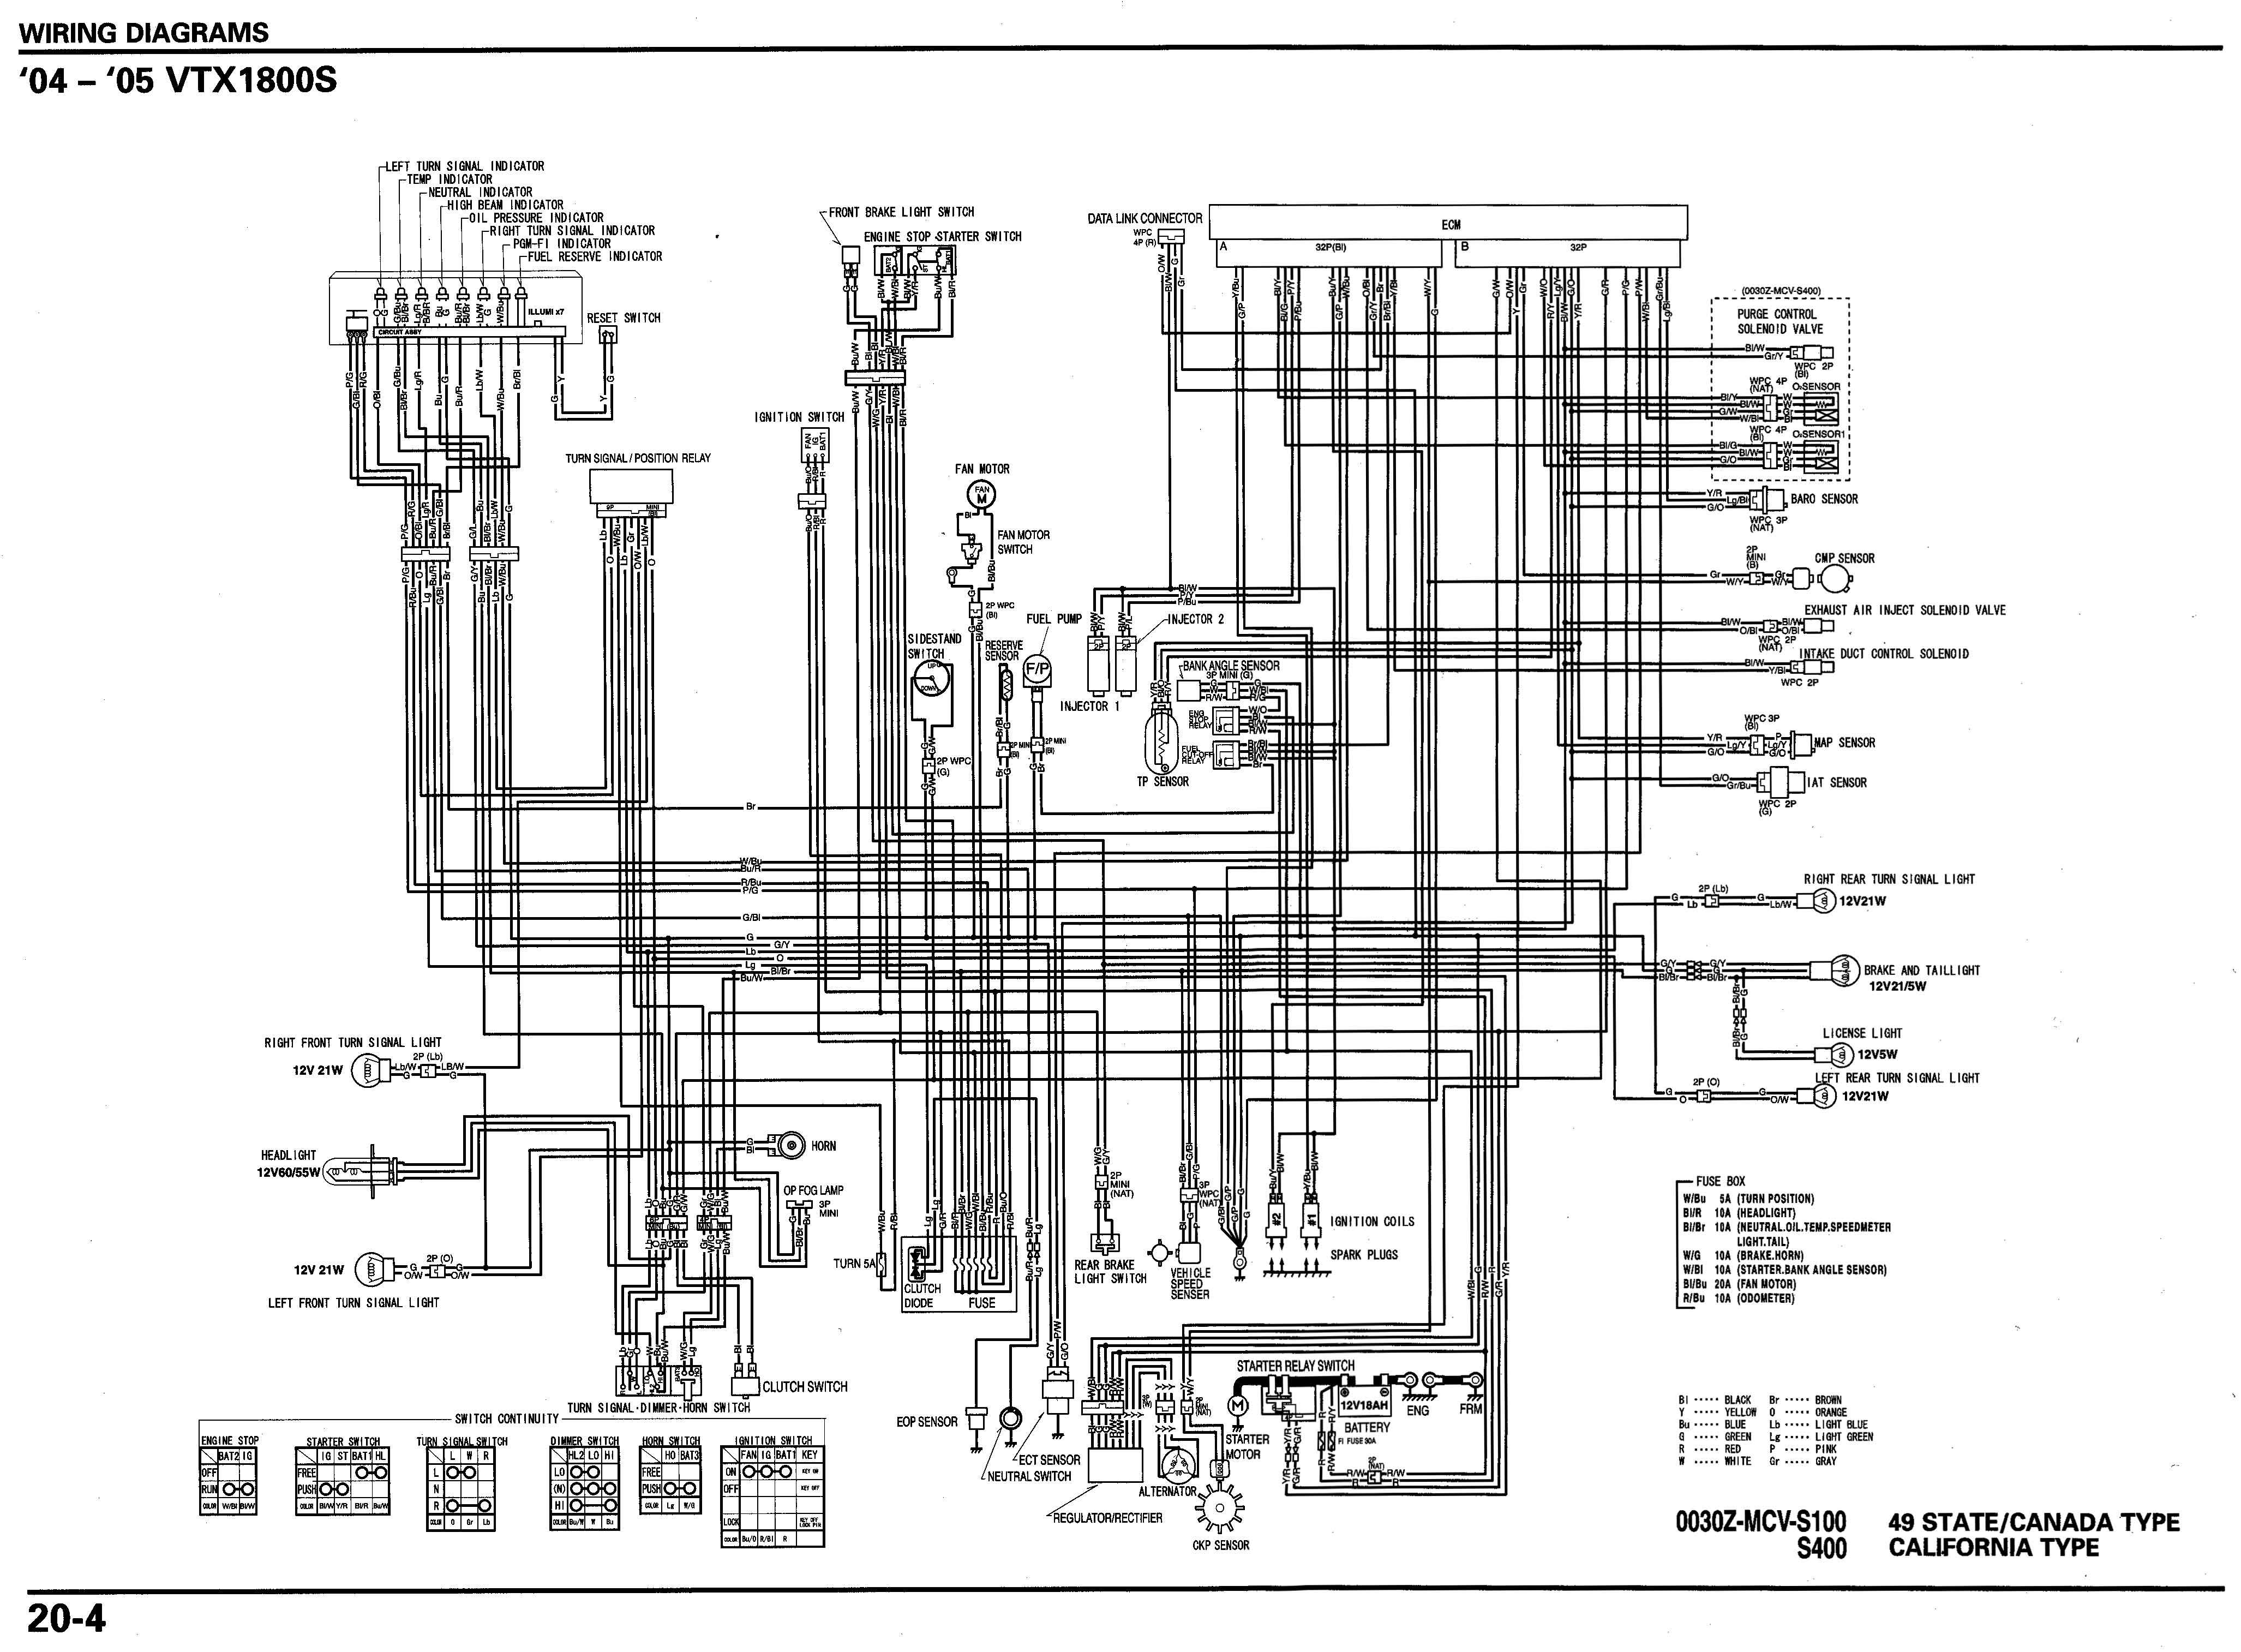 Wiring Schematic Diagram For A 2006 Cbr600rr - Wiring Diagram